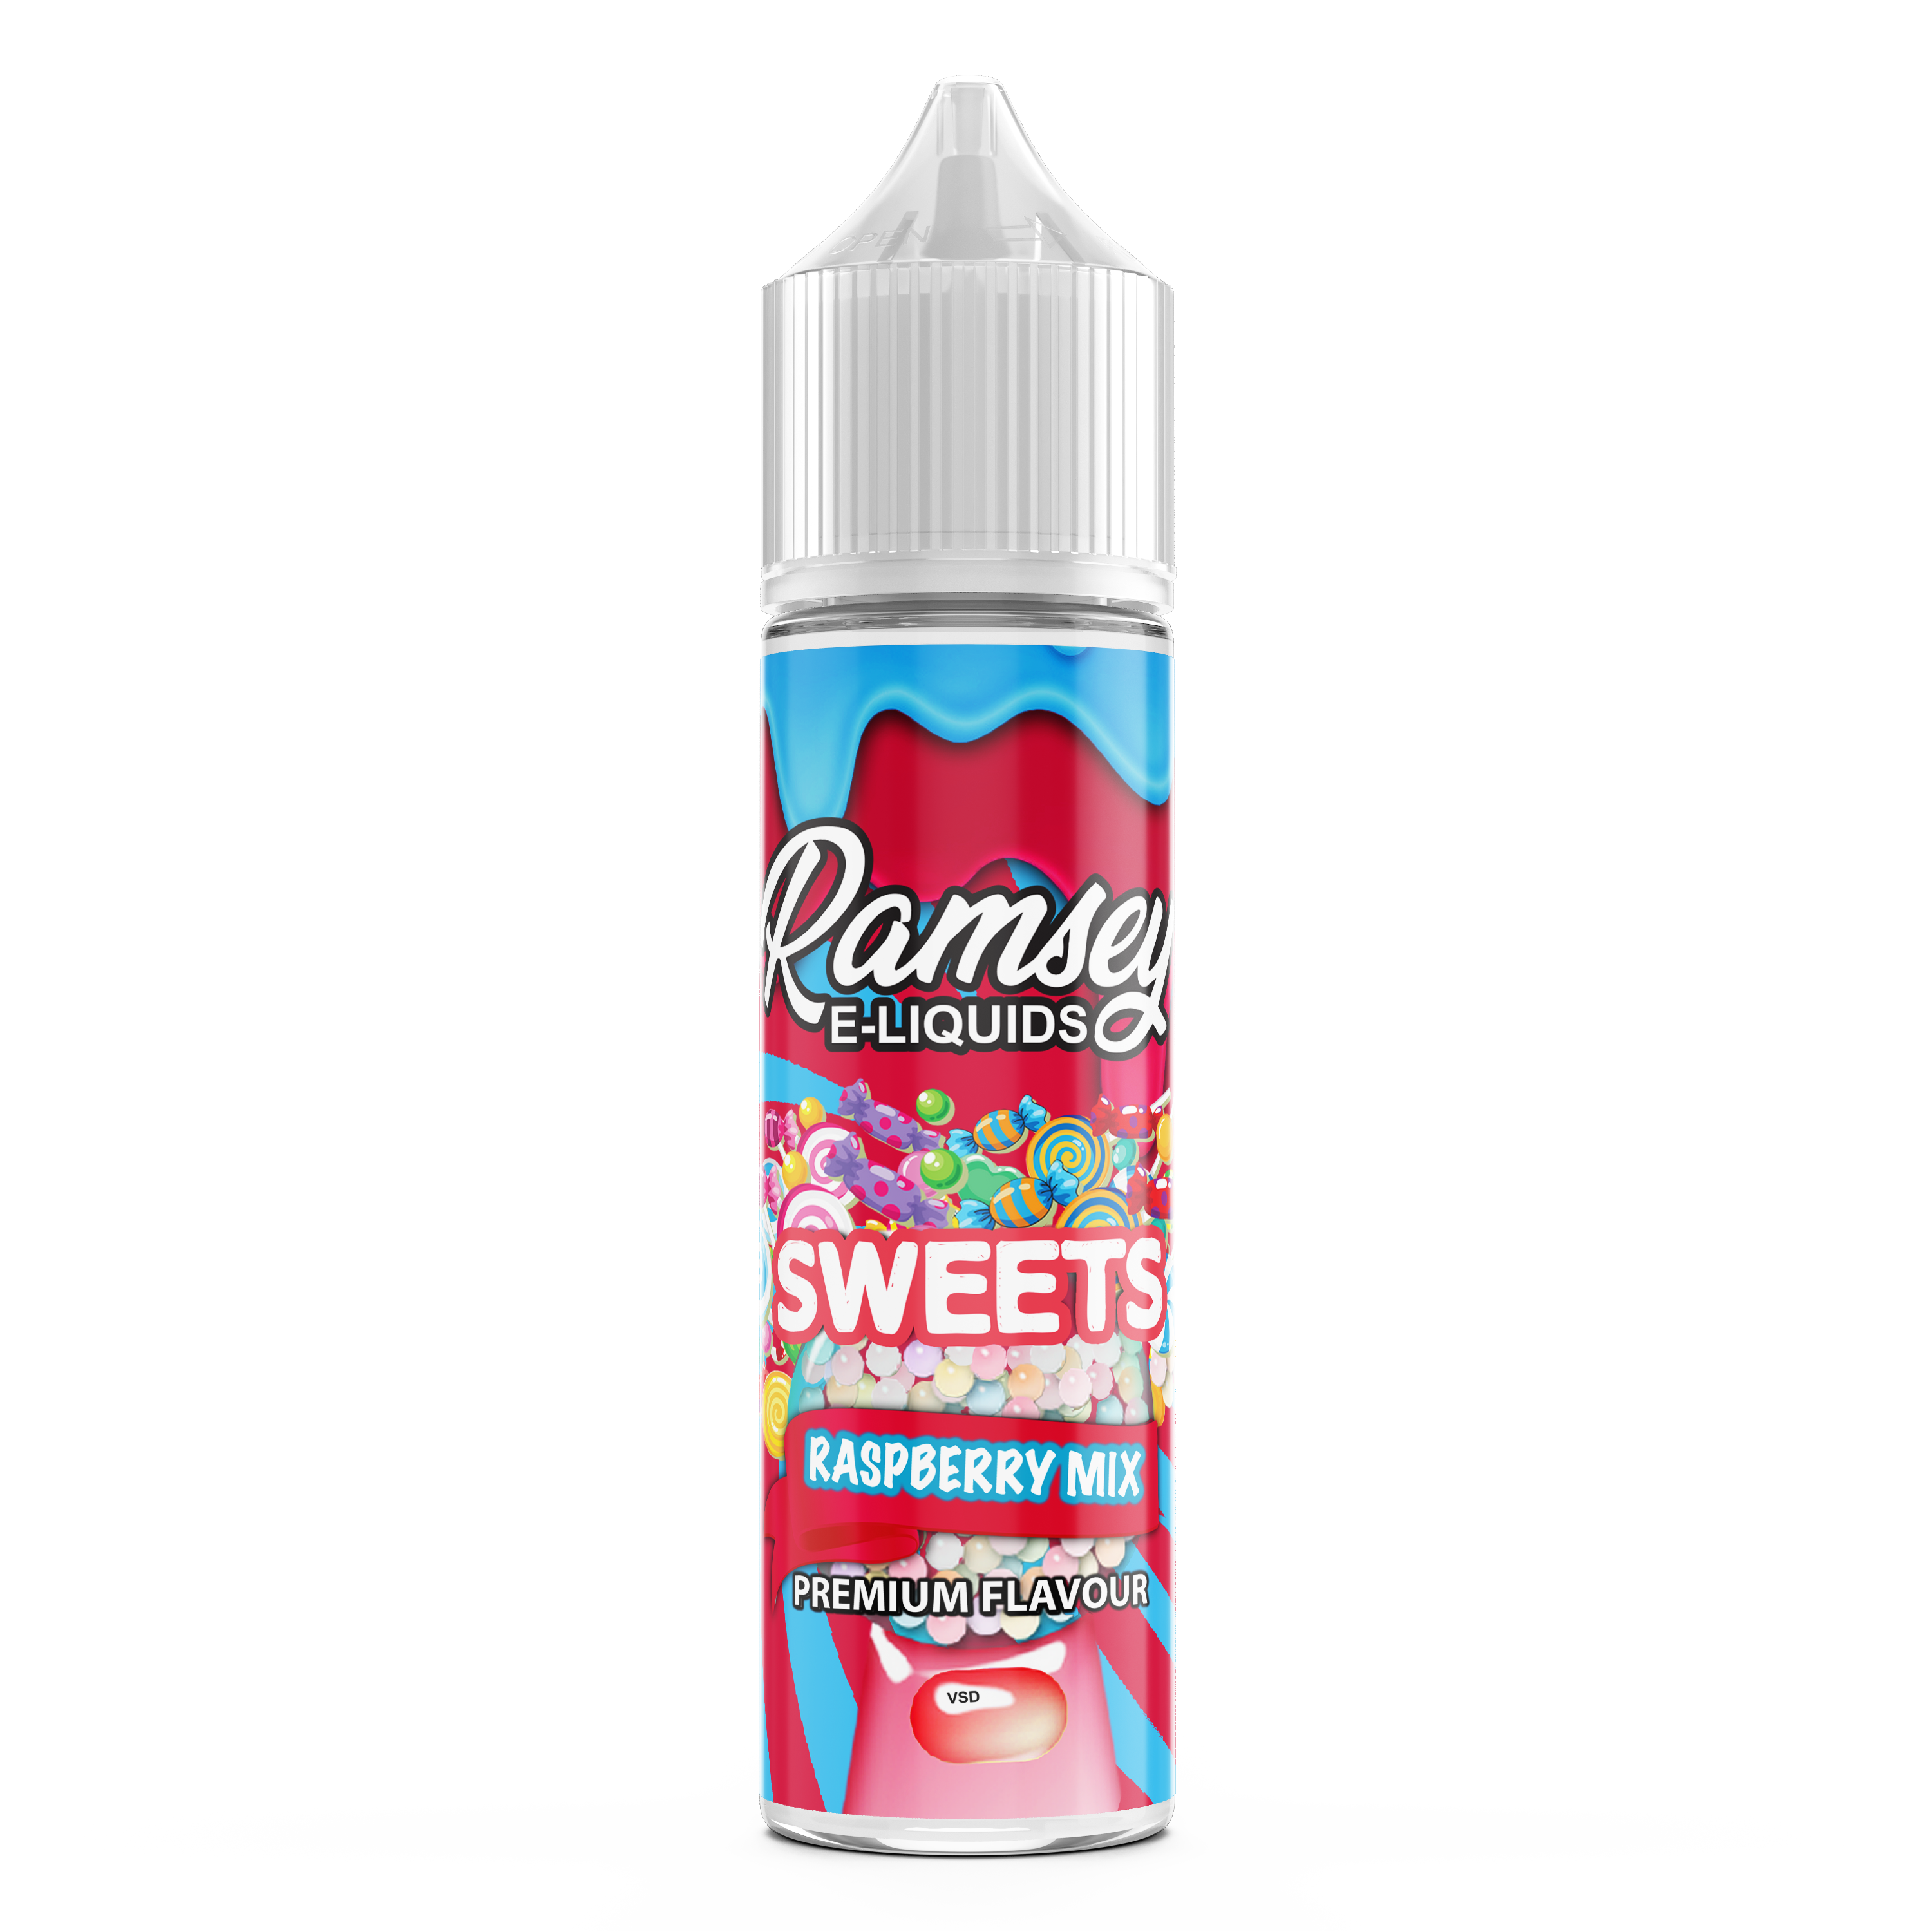 Ramsey E-Liquids Sweets: Raspberry Mix 0mg 50ml Shortfill E-Liquid